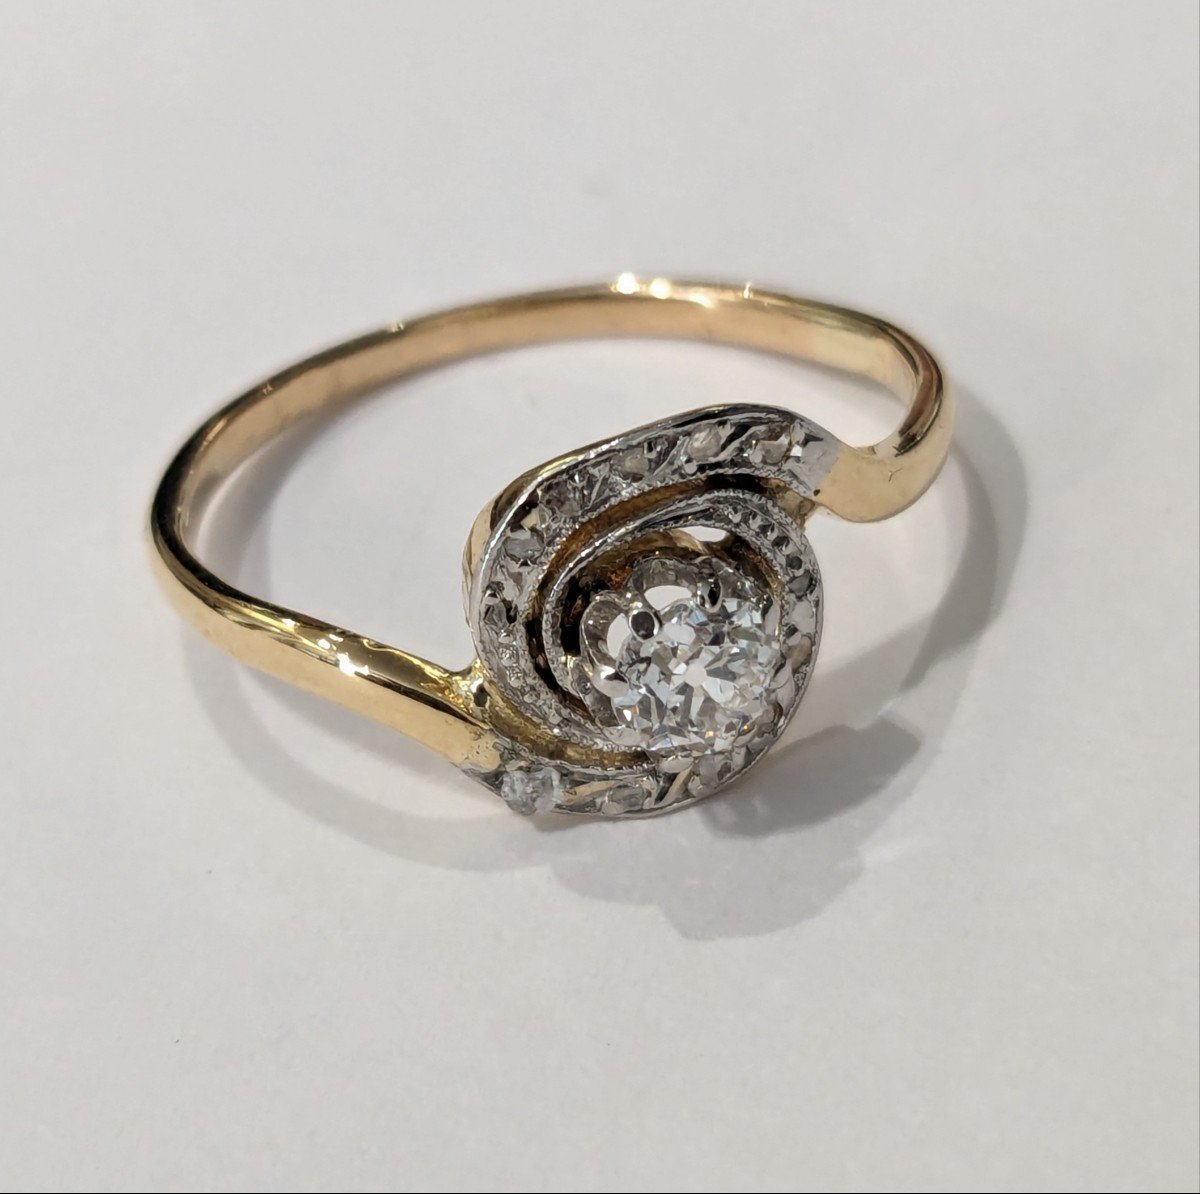 Small Swirl Ring In Yellow Gold, Platinum And Diamonds, 1900 Period-photo-2